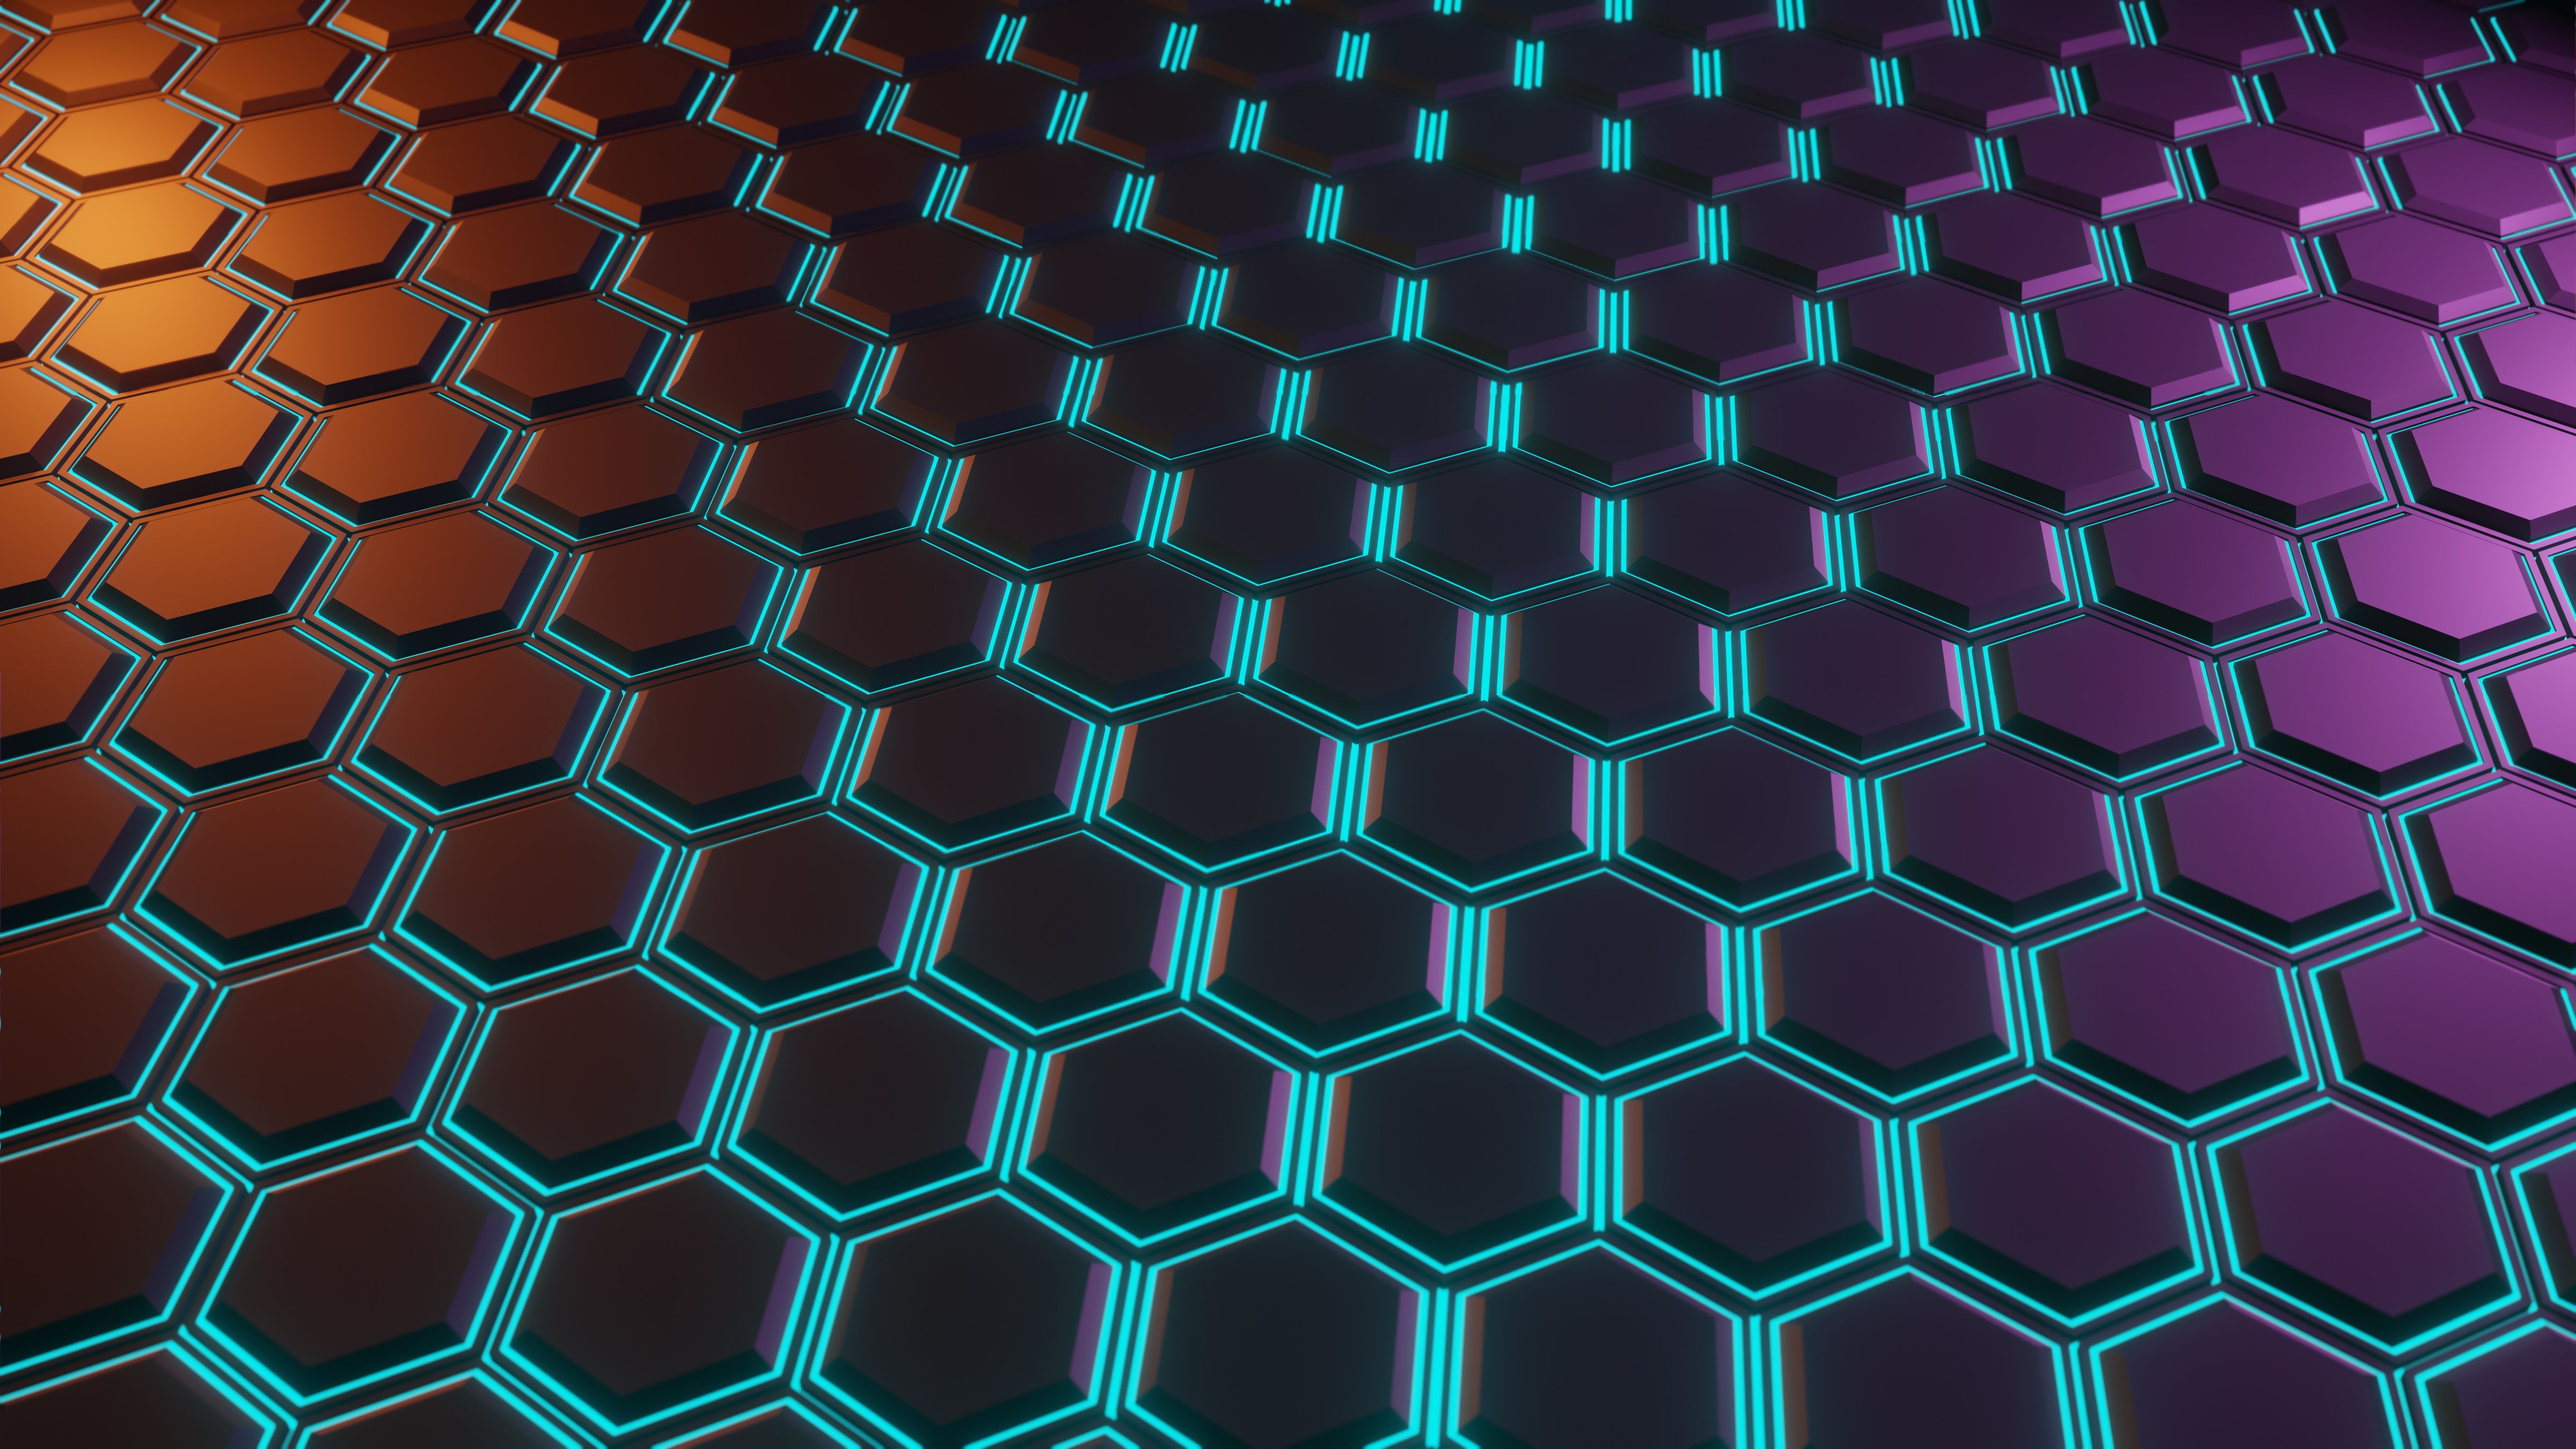 4K New Hexagon Pattern Wallpaper, HD Abstract 4K Wallpaper